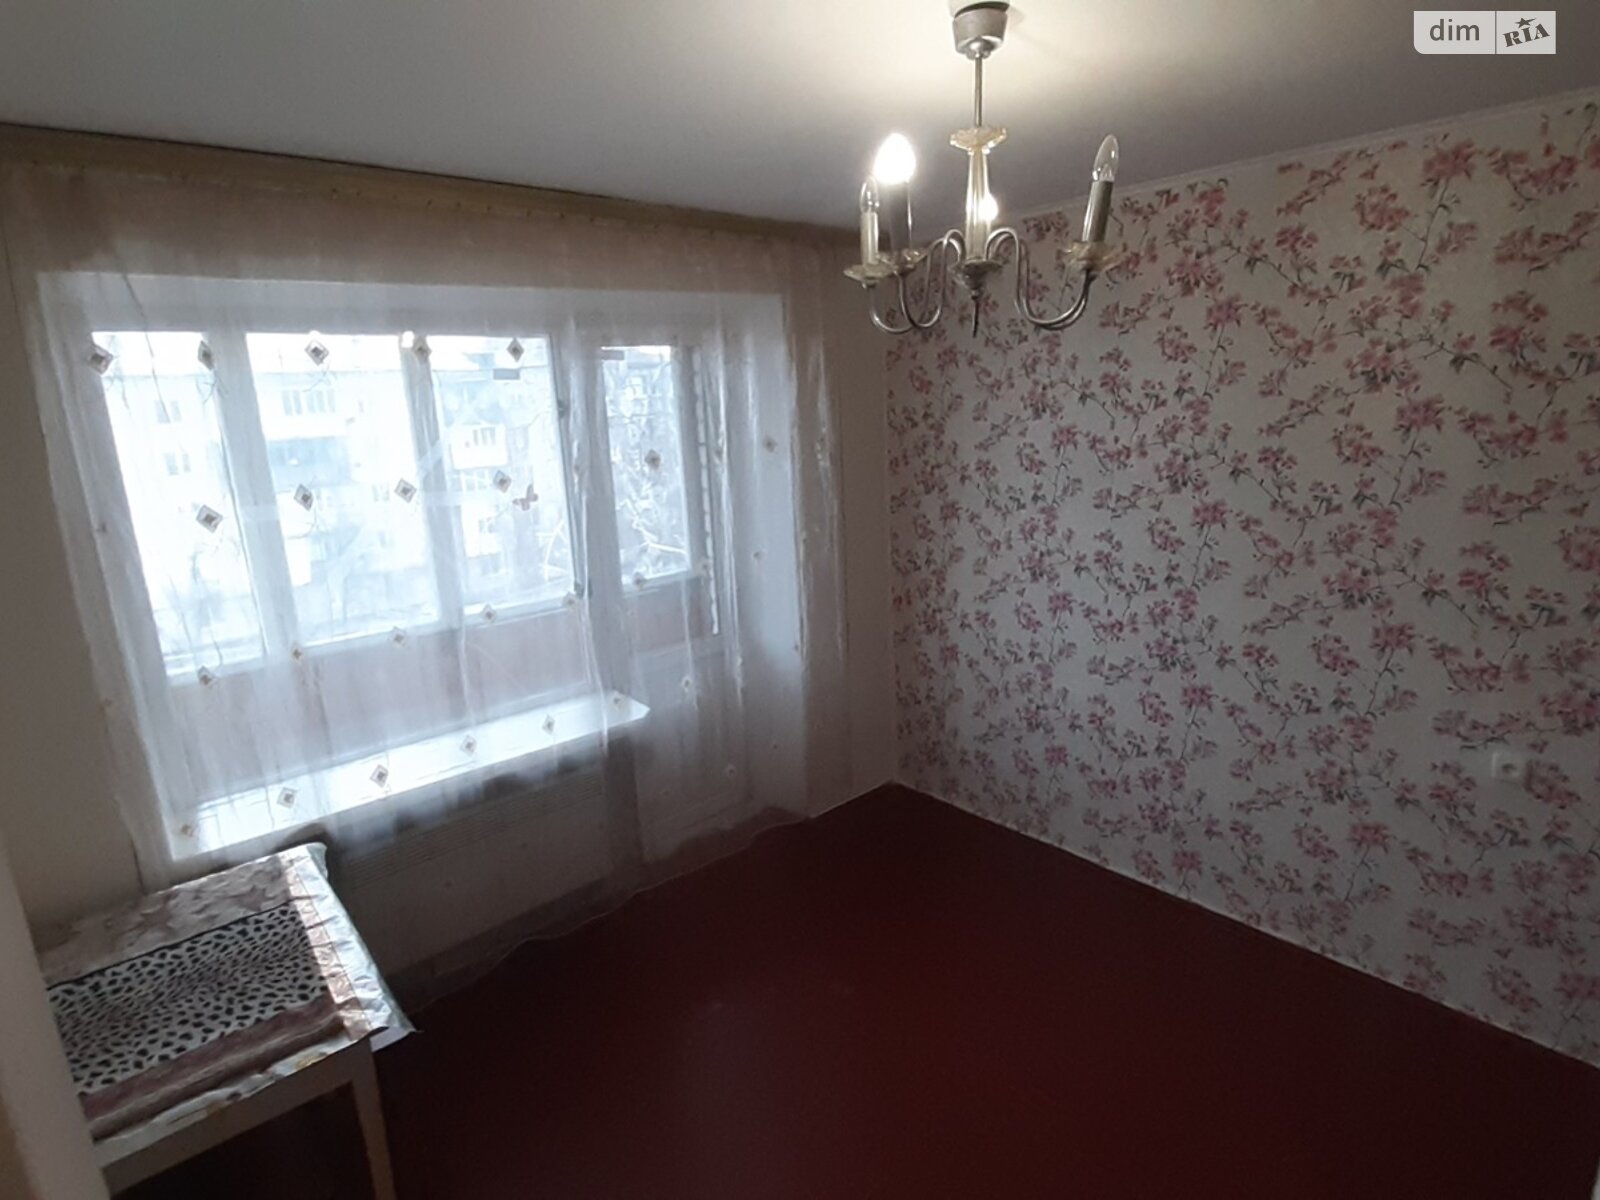 Продажа однокомнатной квартиры в Барышевке, на ул. Богдана Хмельницкого 22, район Барышевка фото 1